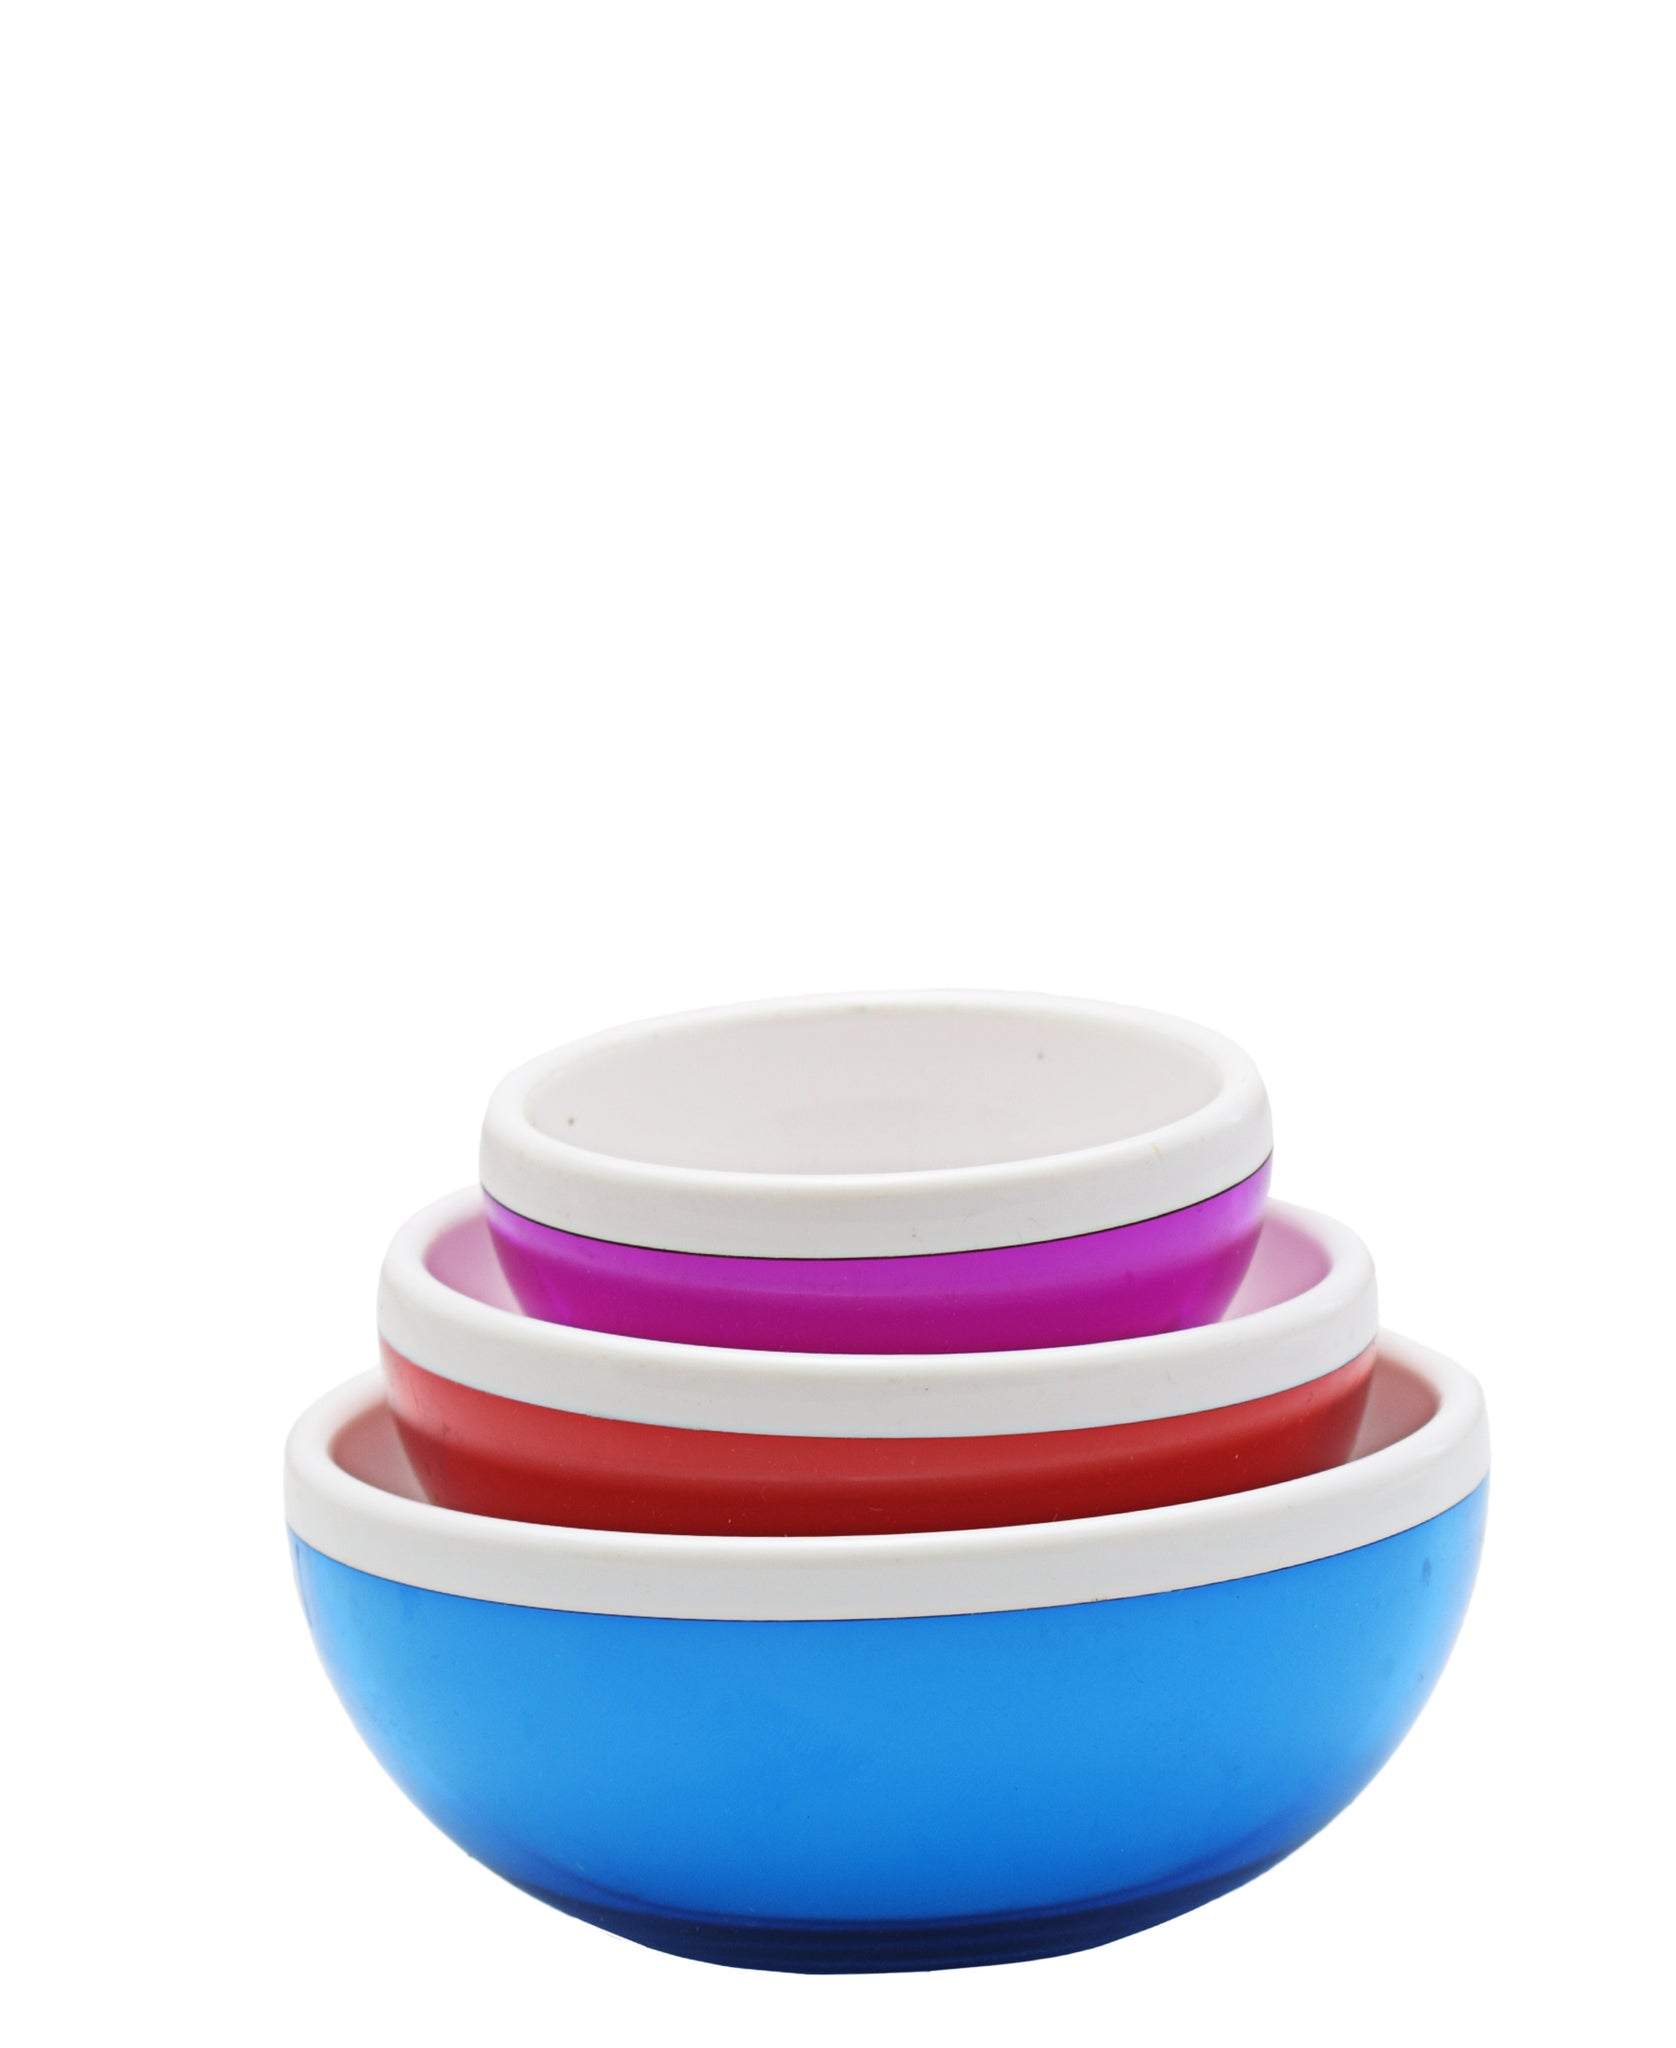 Prep & Serve Bowl 3 Piece - Pink, Red & Blue